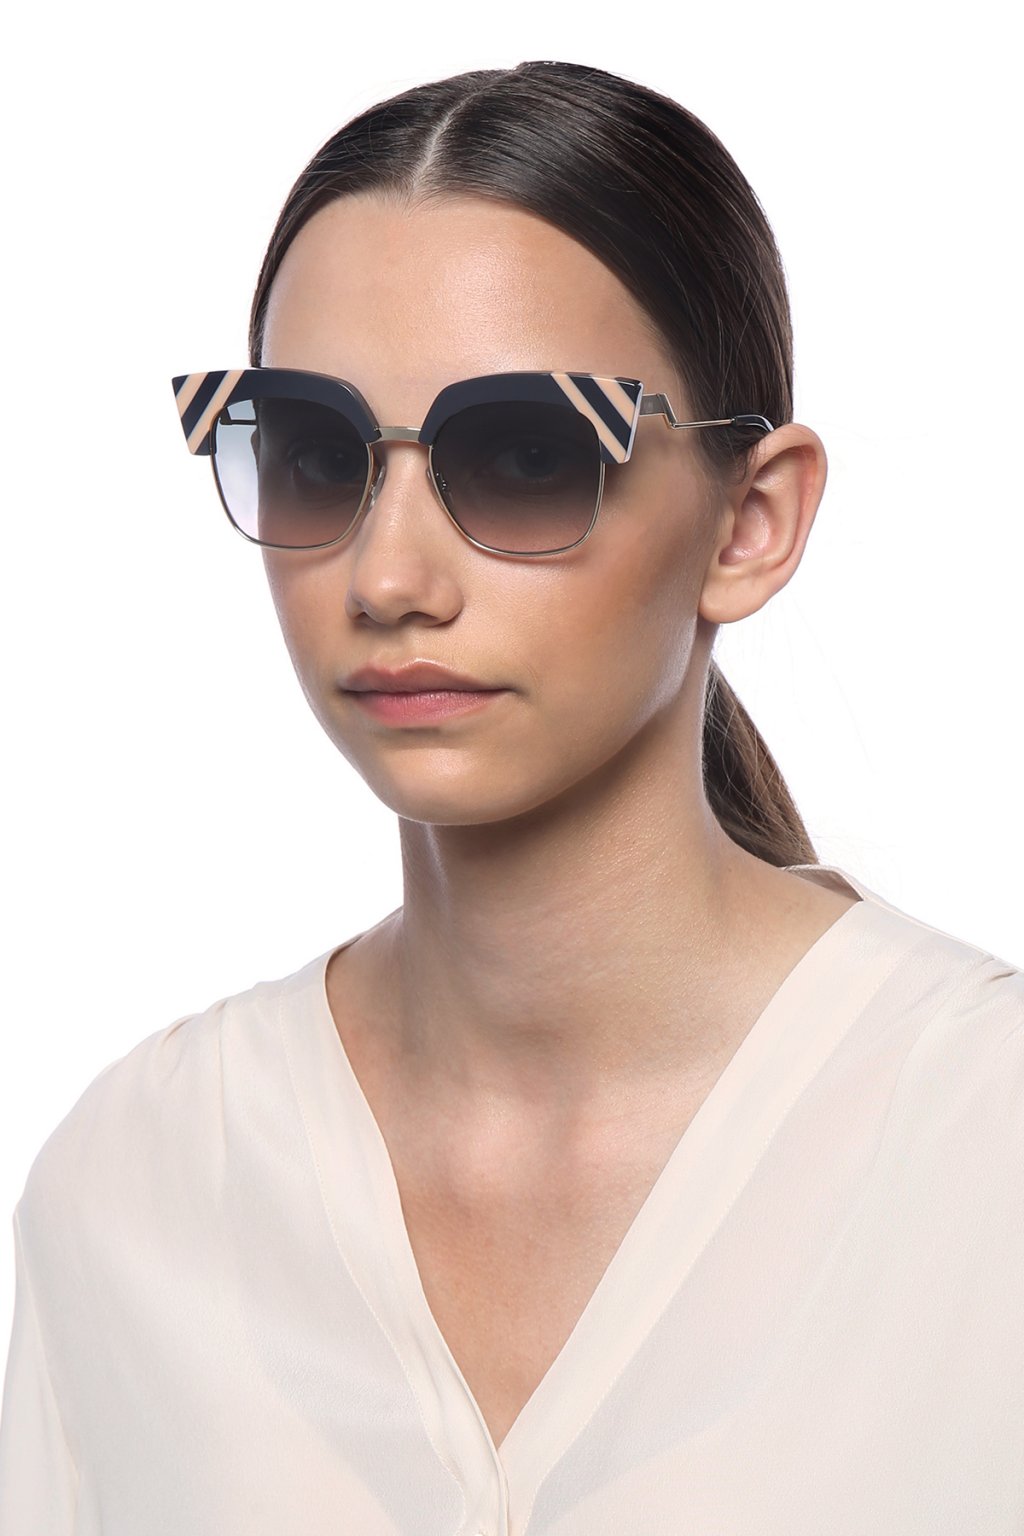 fendi waves sunglasses